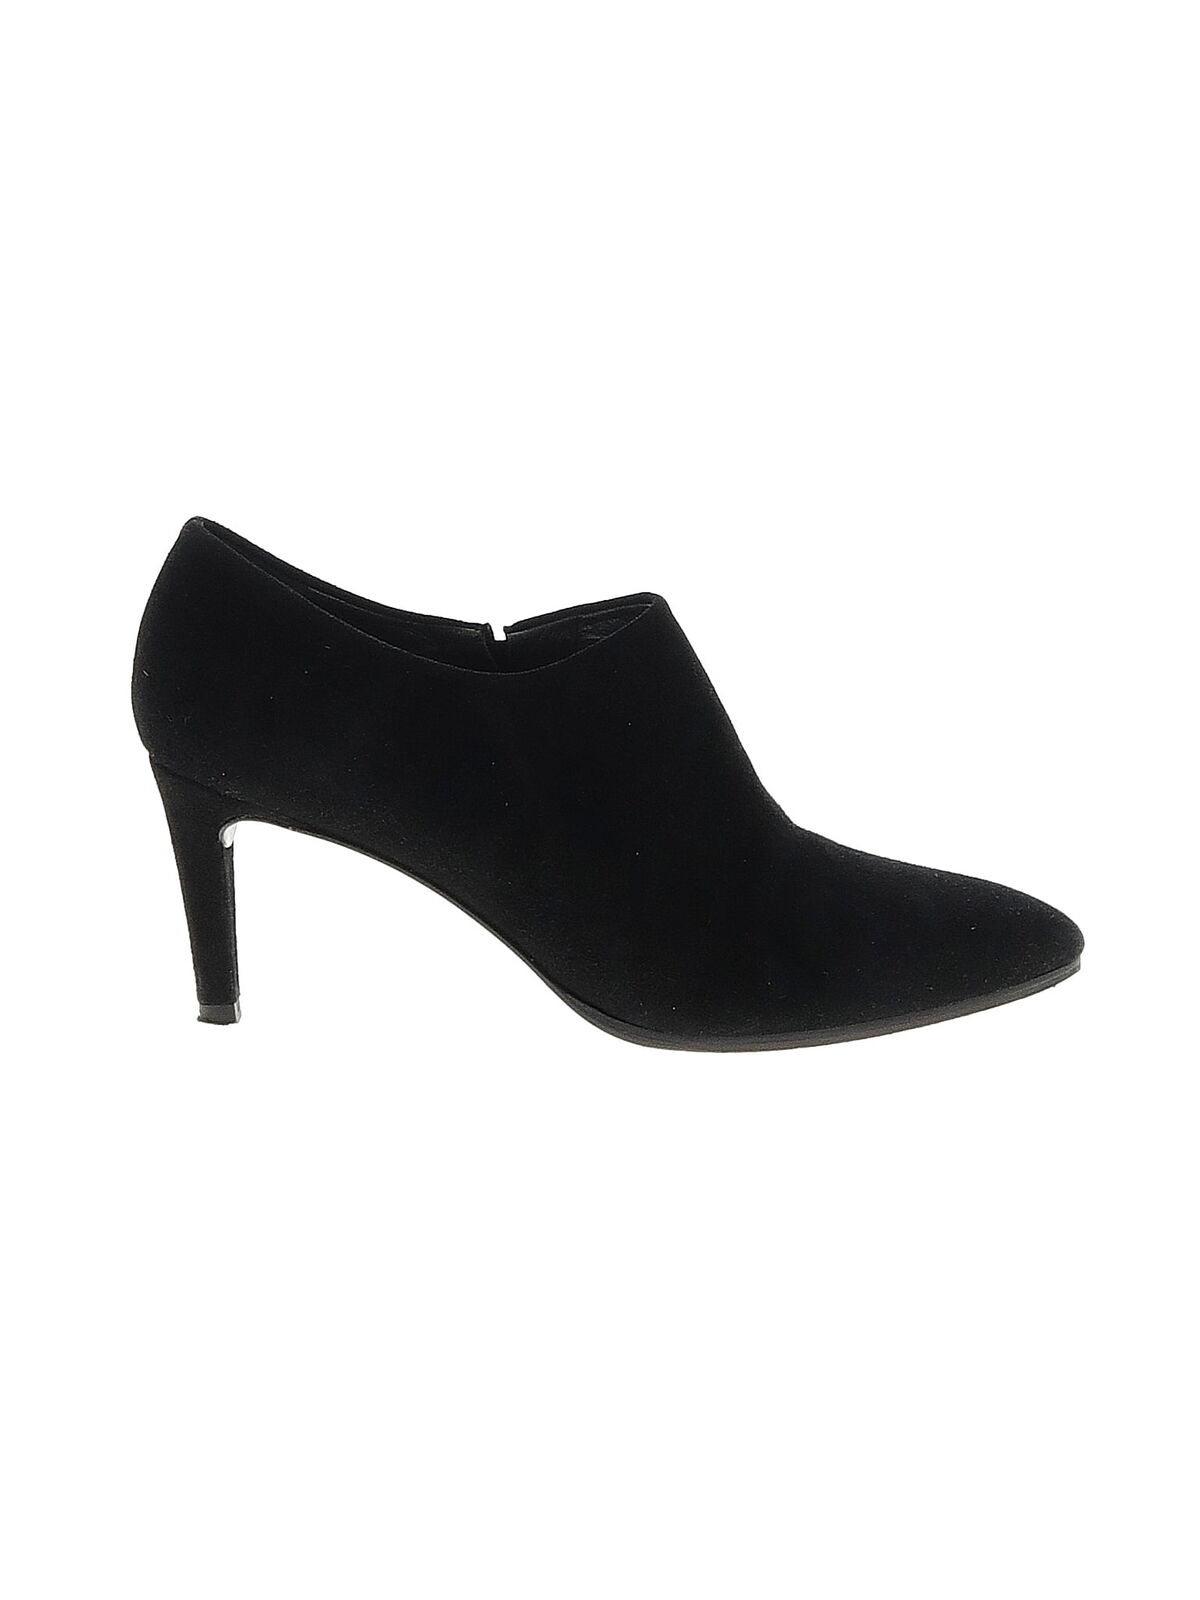 Stuart Weitzman Women Black Ankle Boots 6.5 - image 1